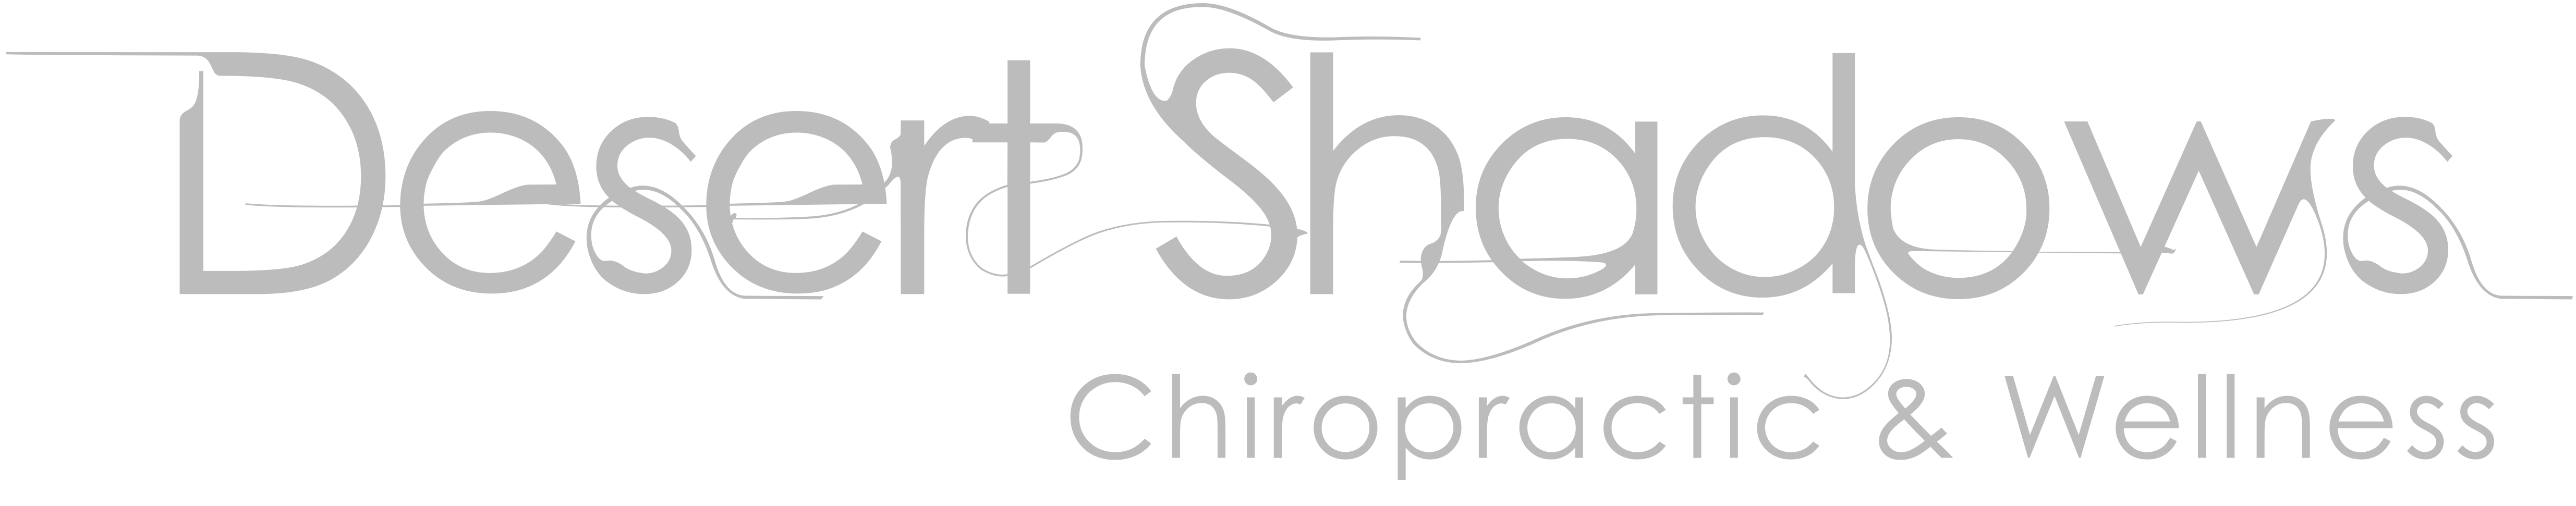 Desert Shadows | Chiropractic & Wellness Logo